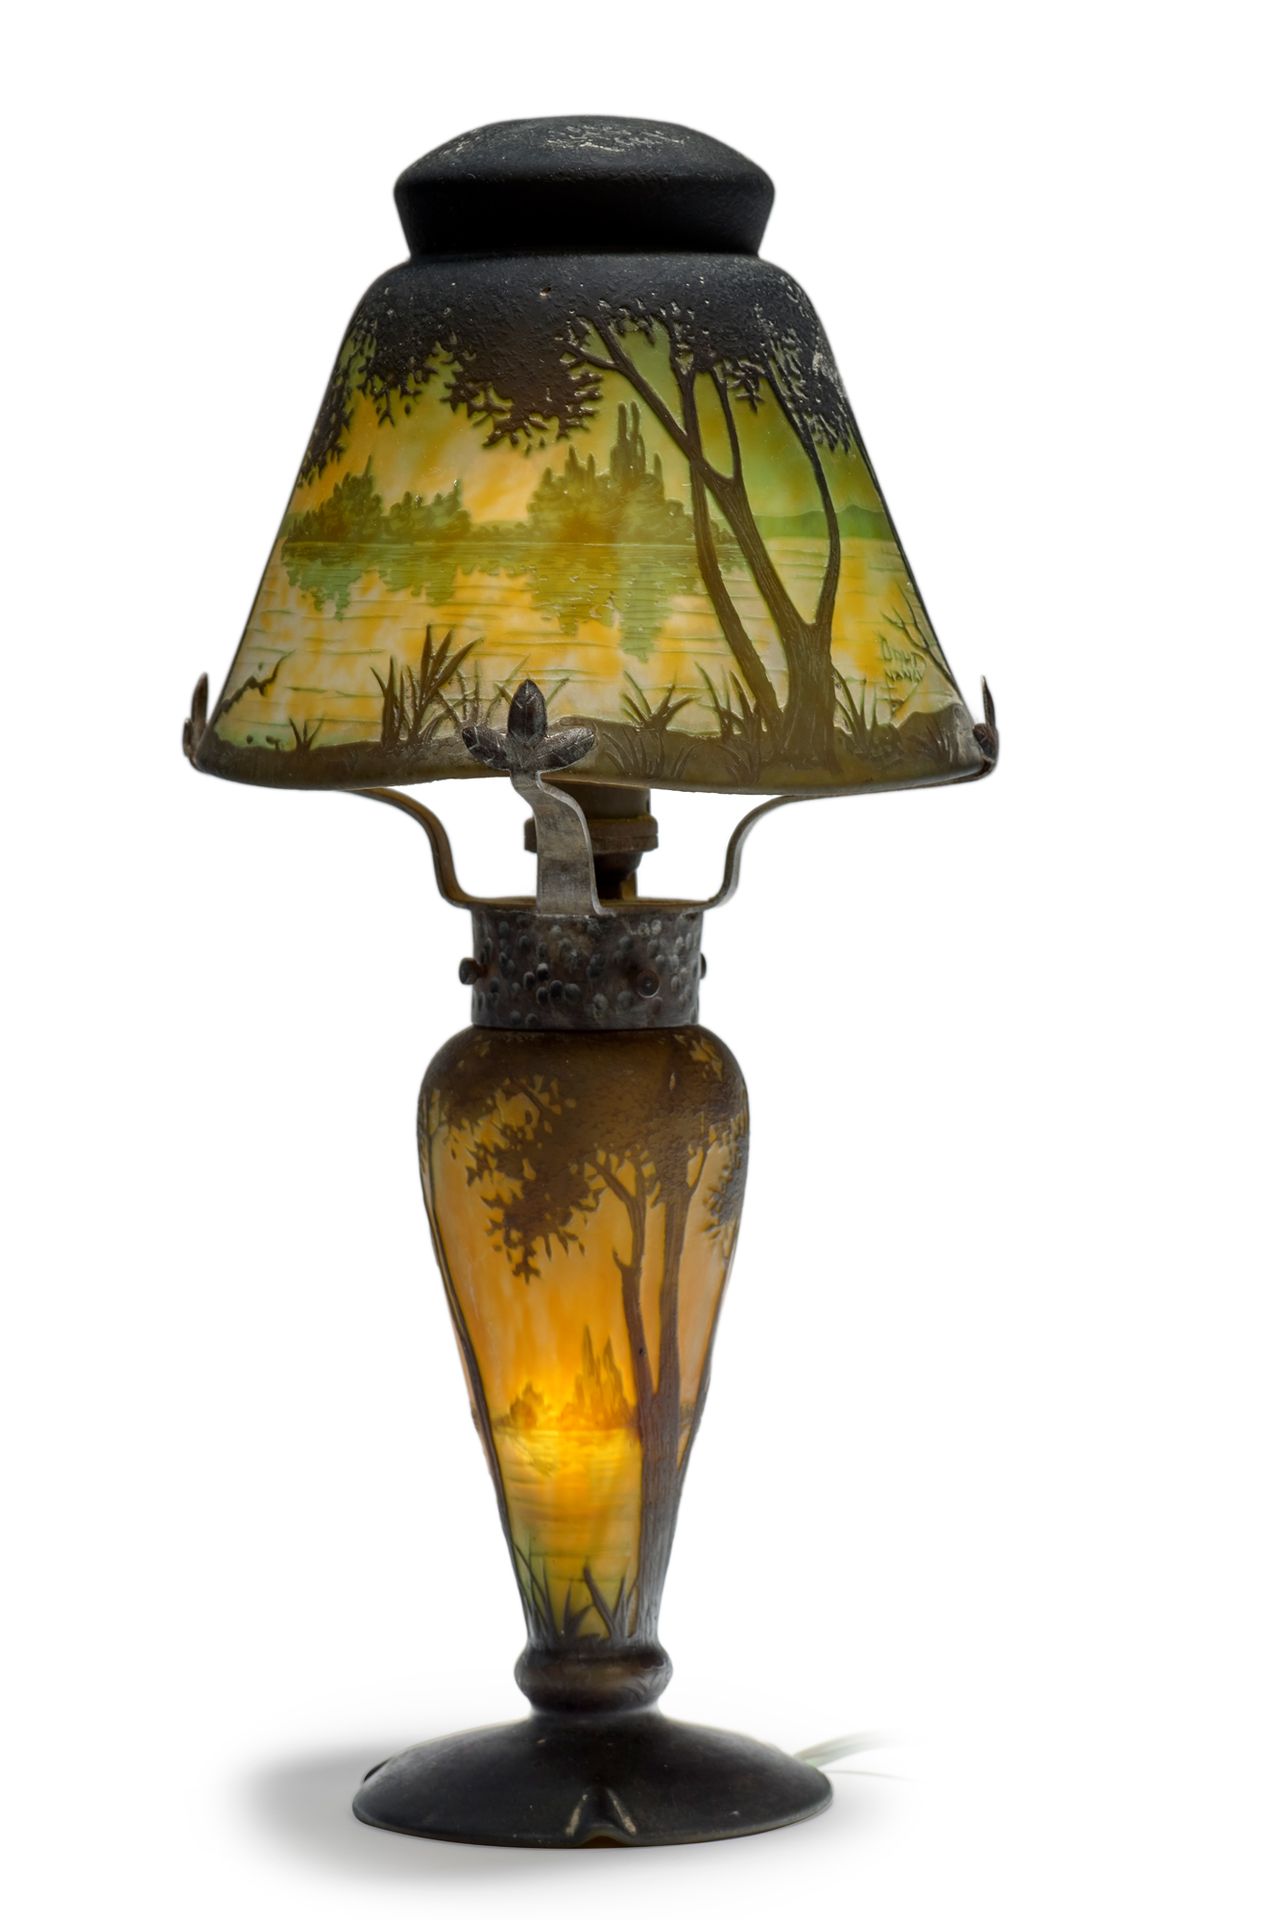 DAUM Nancy 衬里玻璃台灯，酸蚀装饰湖景
签名 "Daum Nancy"
大约1900年
高：36.5厘米